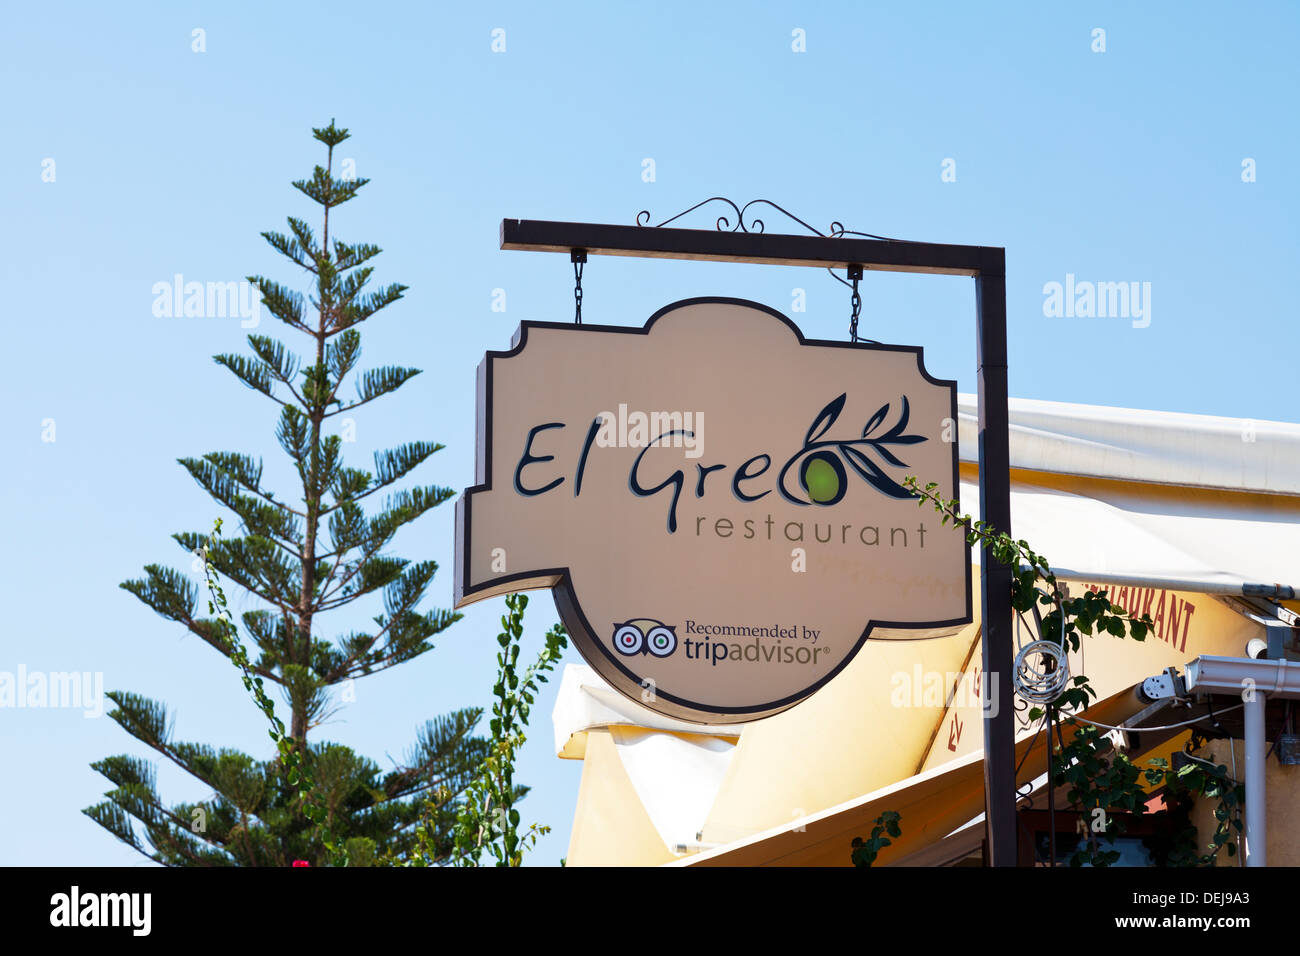 El Greco Restaurant à Nidri Lefkas Lefkada île grecque Grèce recommandé par tripadvisor inscription Nydri Banque D'Images